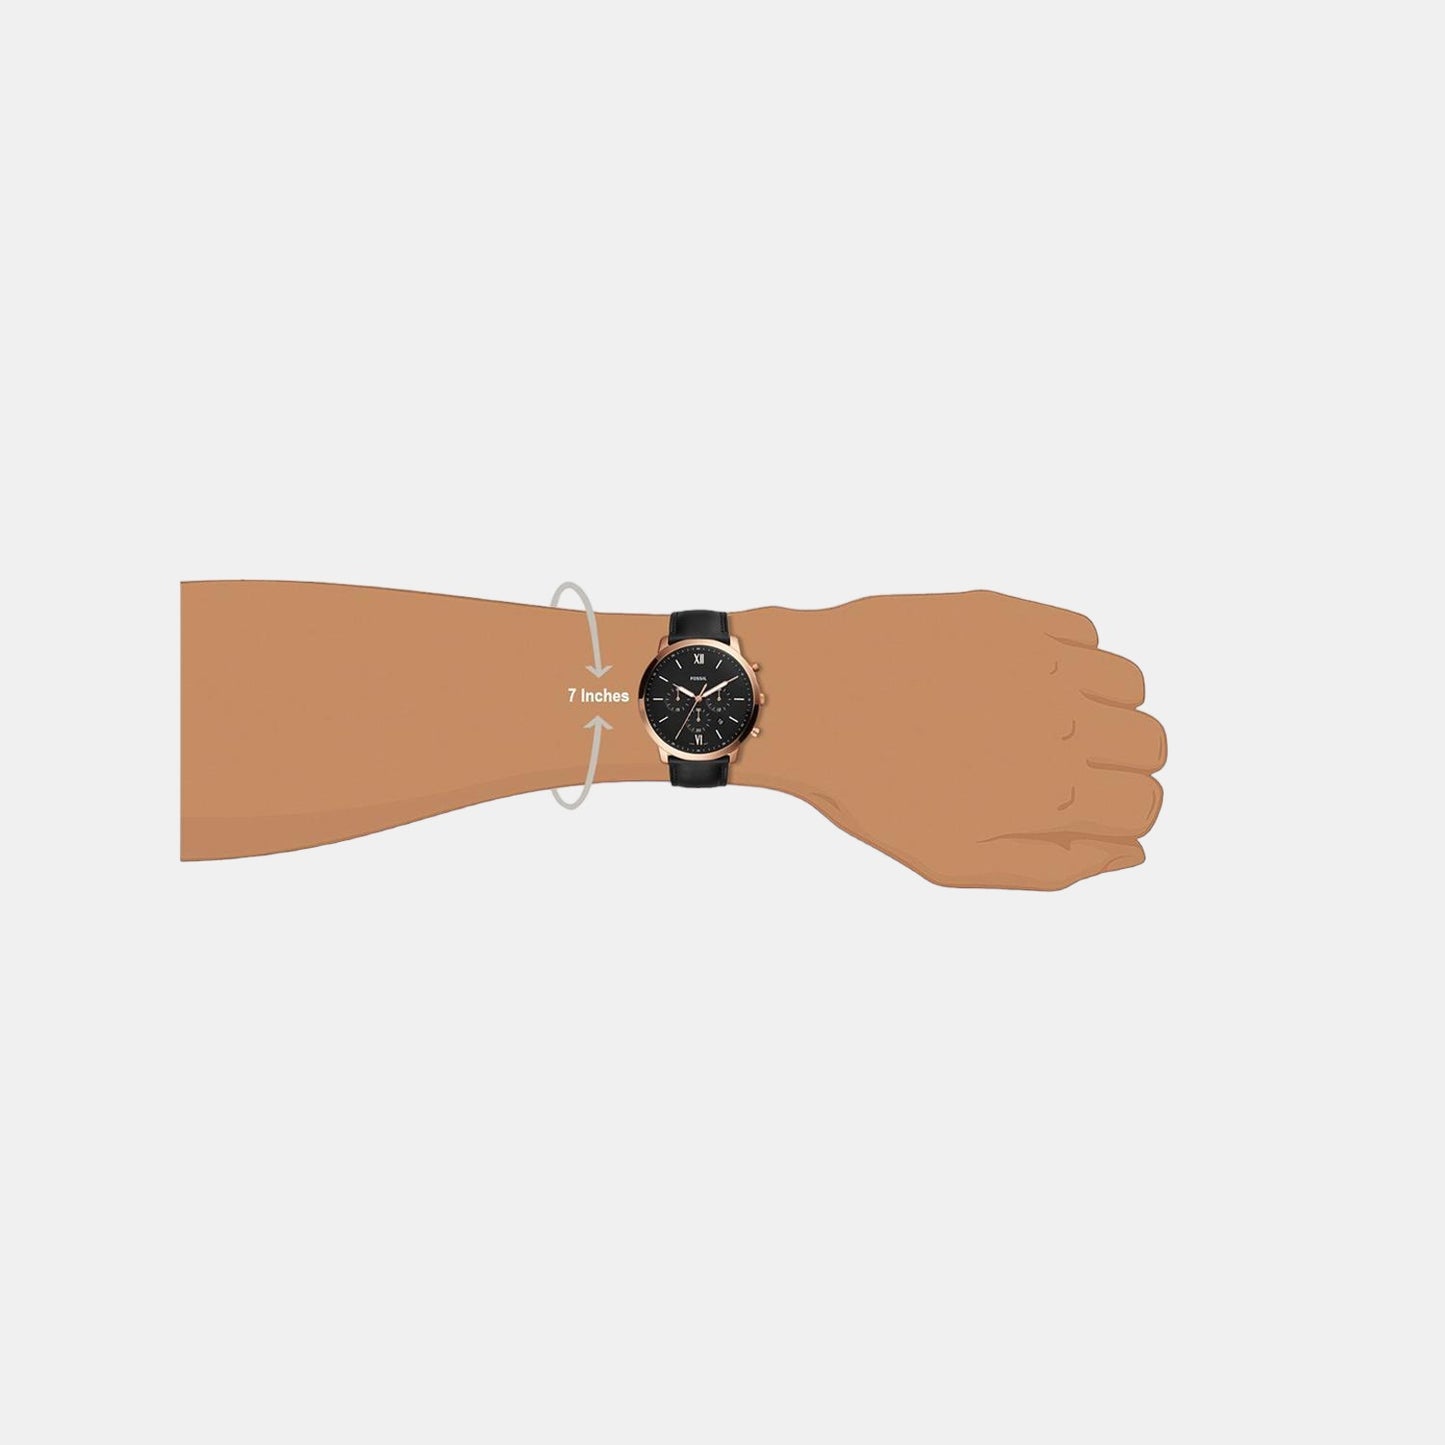 Male Black Quartz Leather Chronograph Watch FS5381